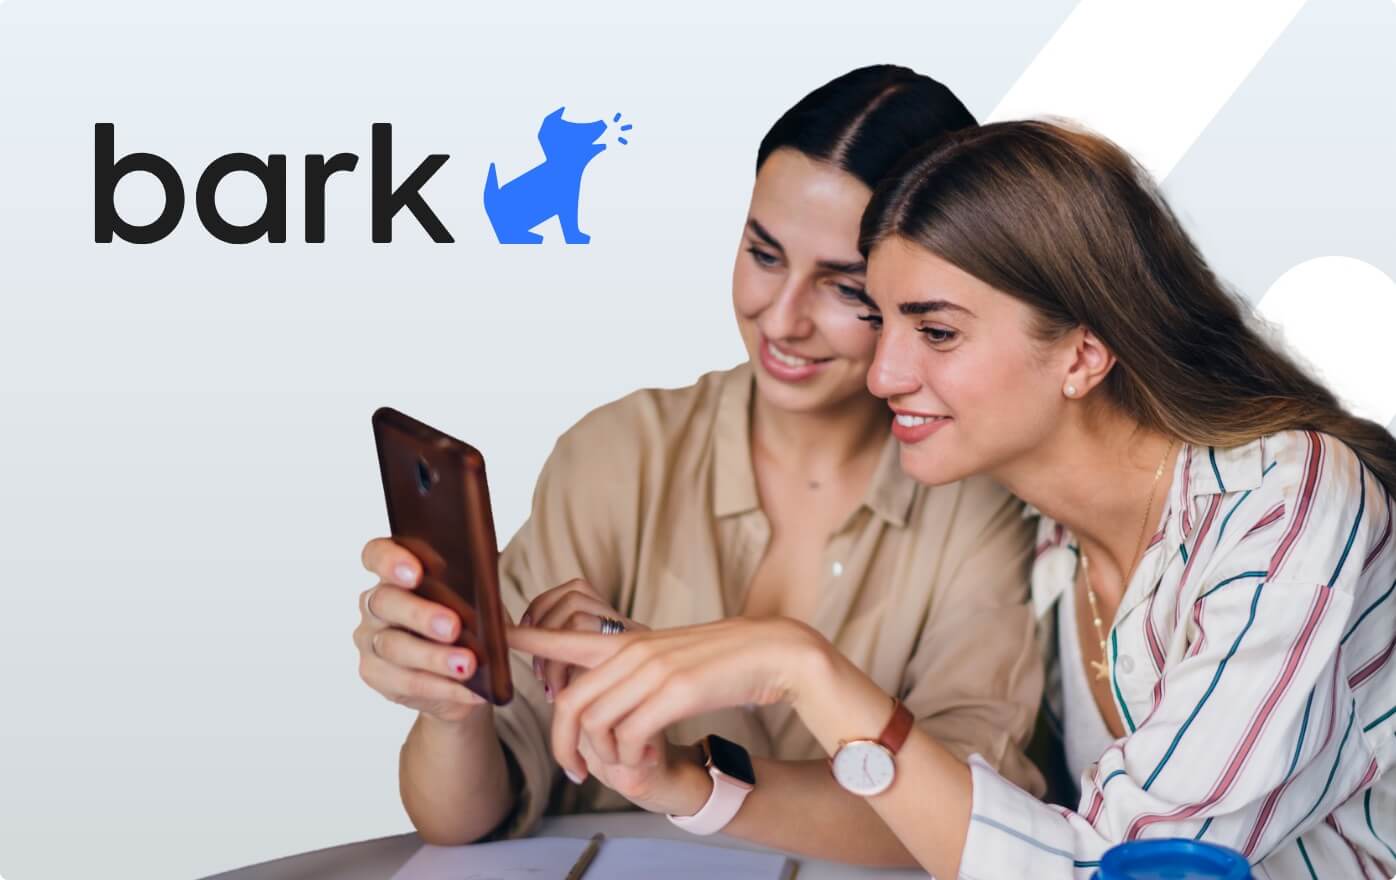 Bark parental monitoring app